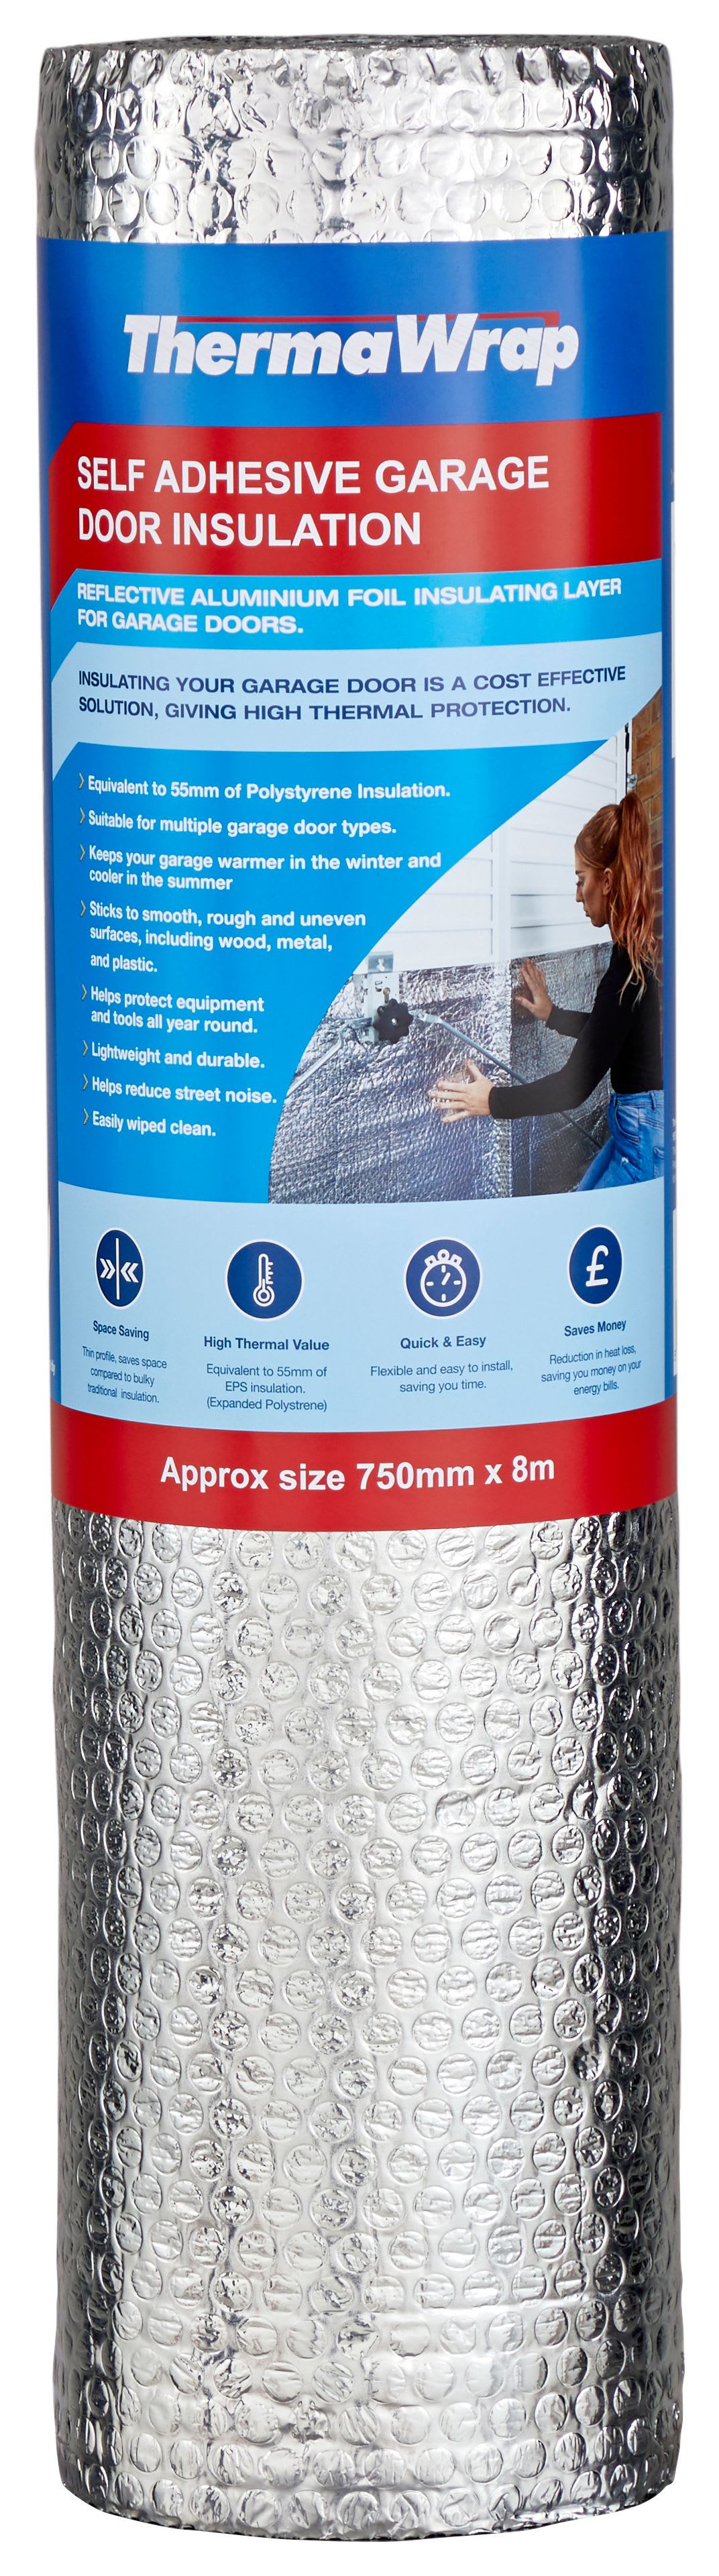 ThermaWrap Self-Adhesive Garage Door Insulation Roll - 750mm